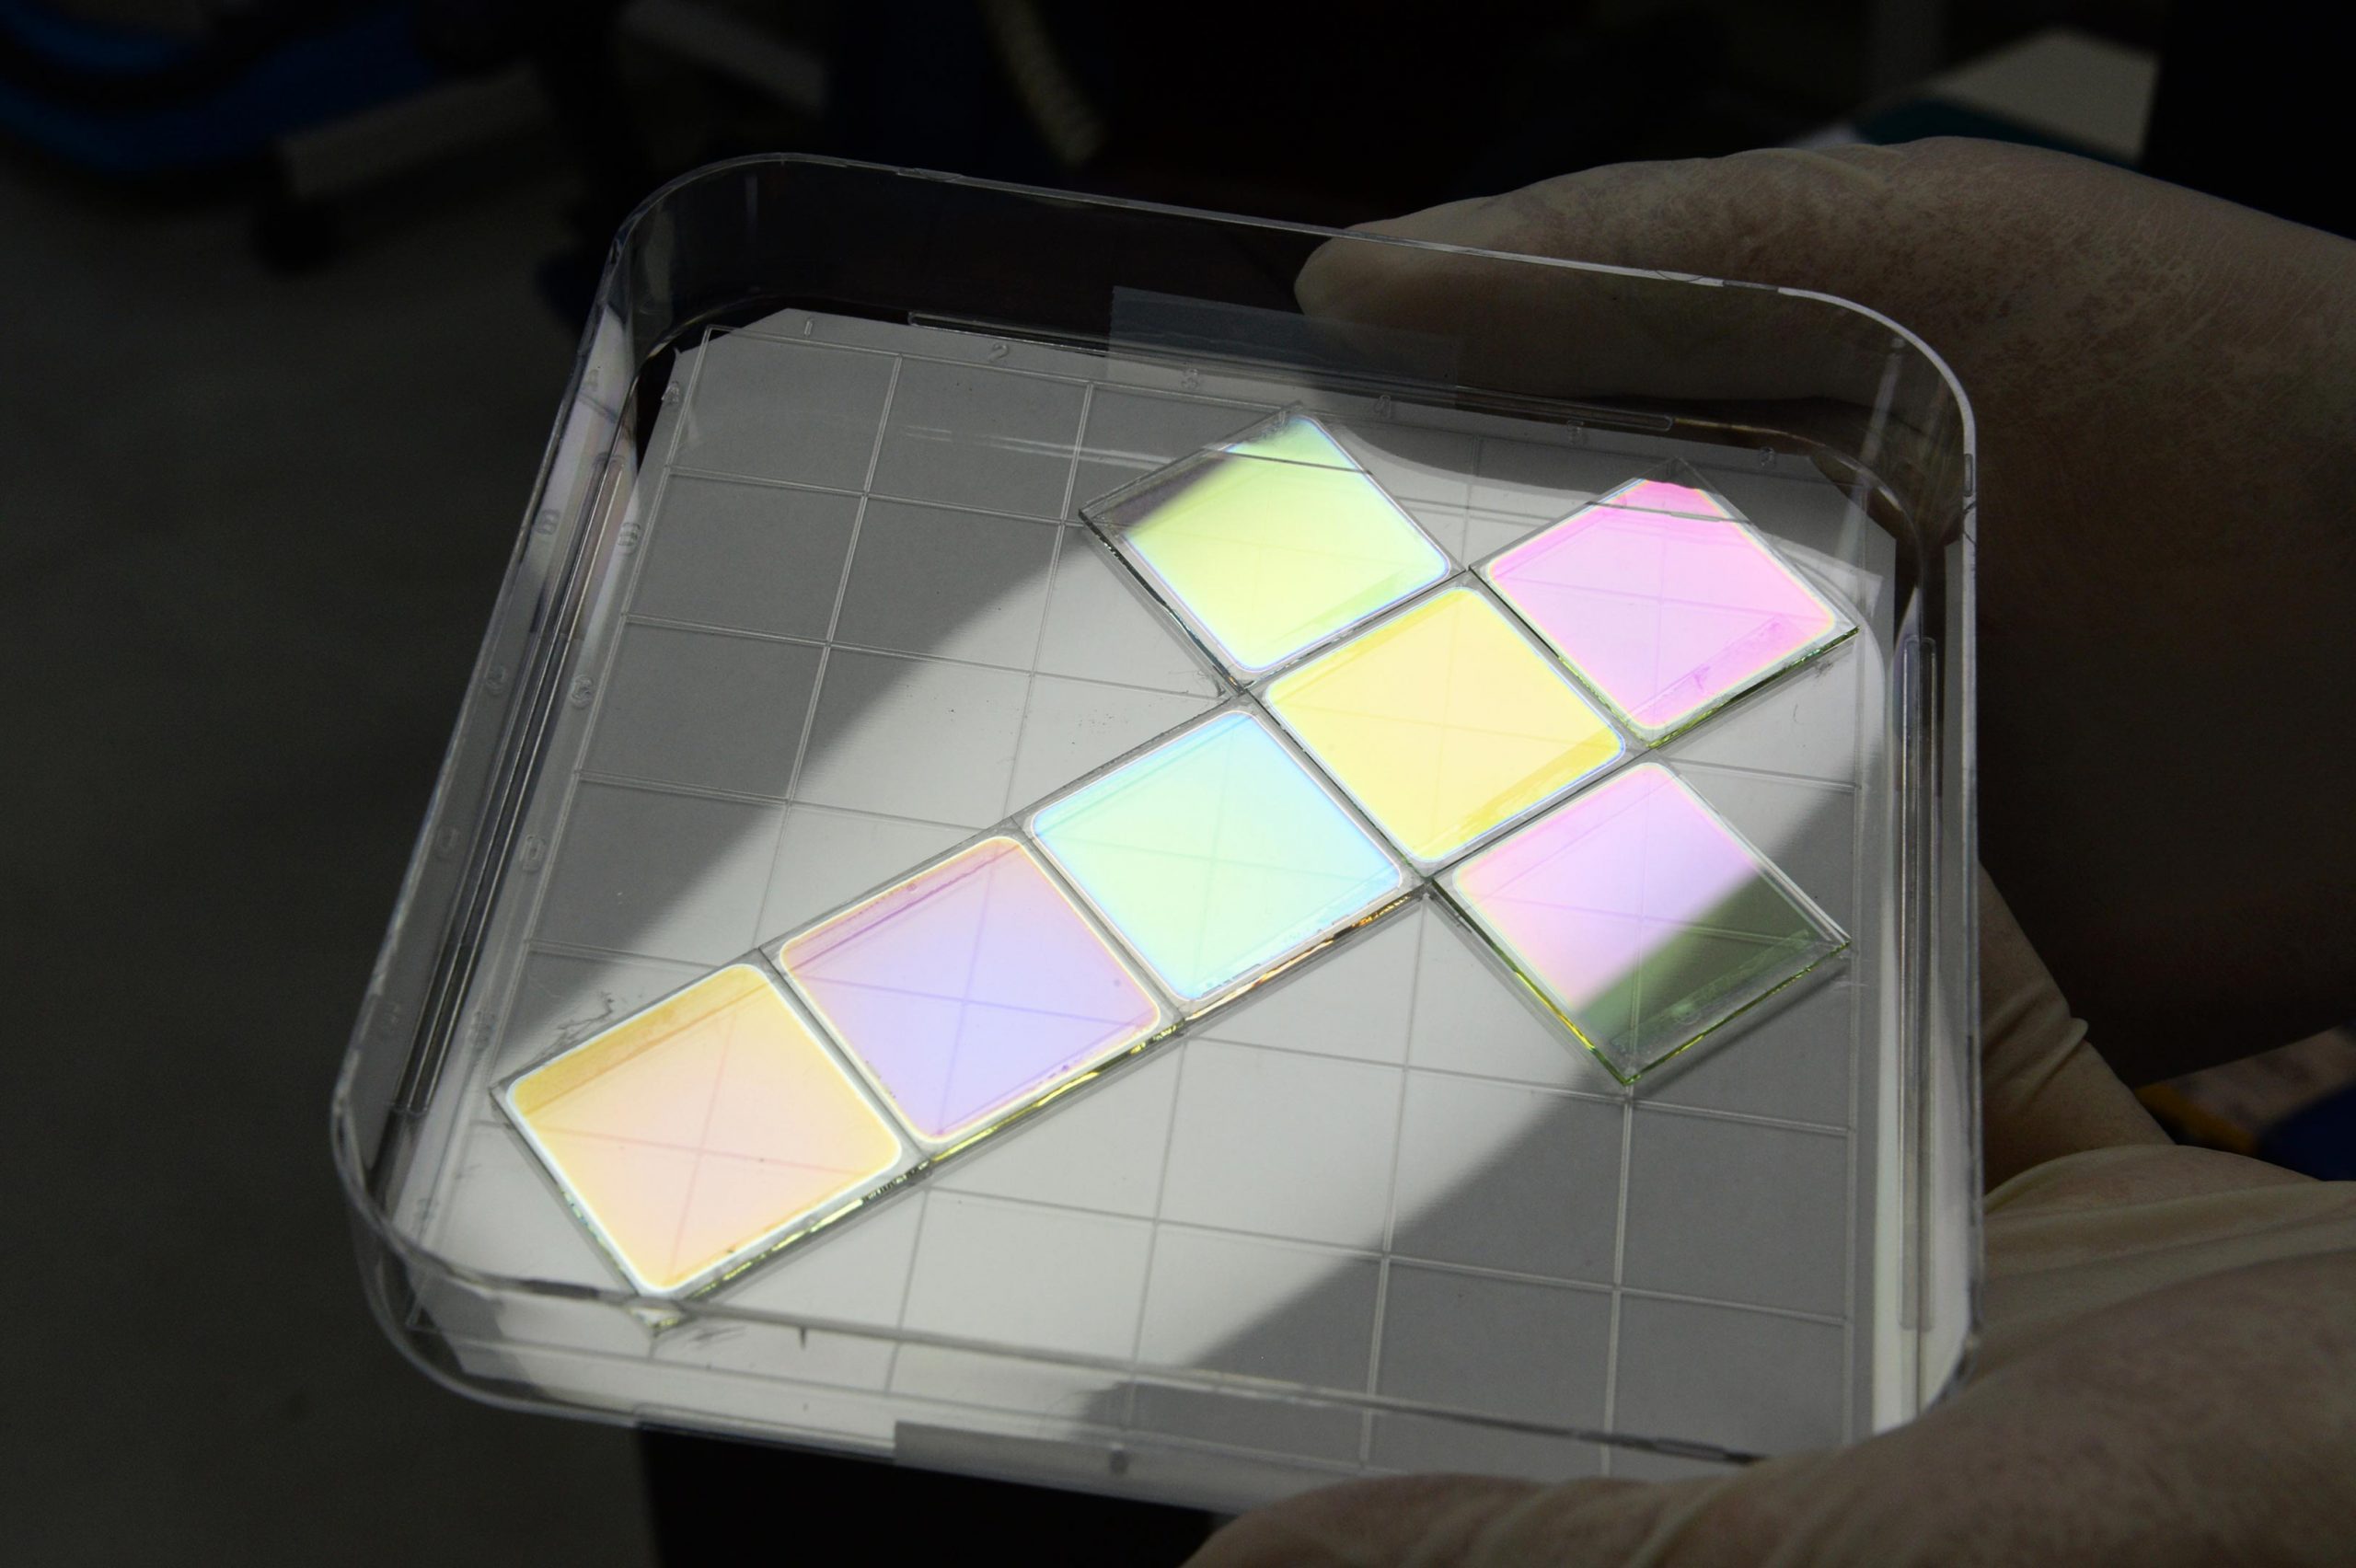 phd thesis thin film solar cells